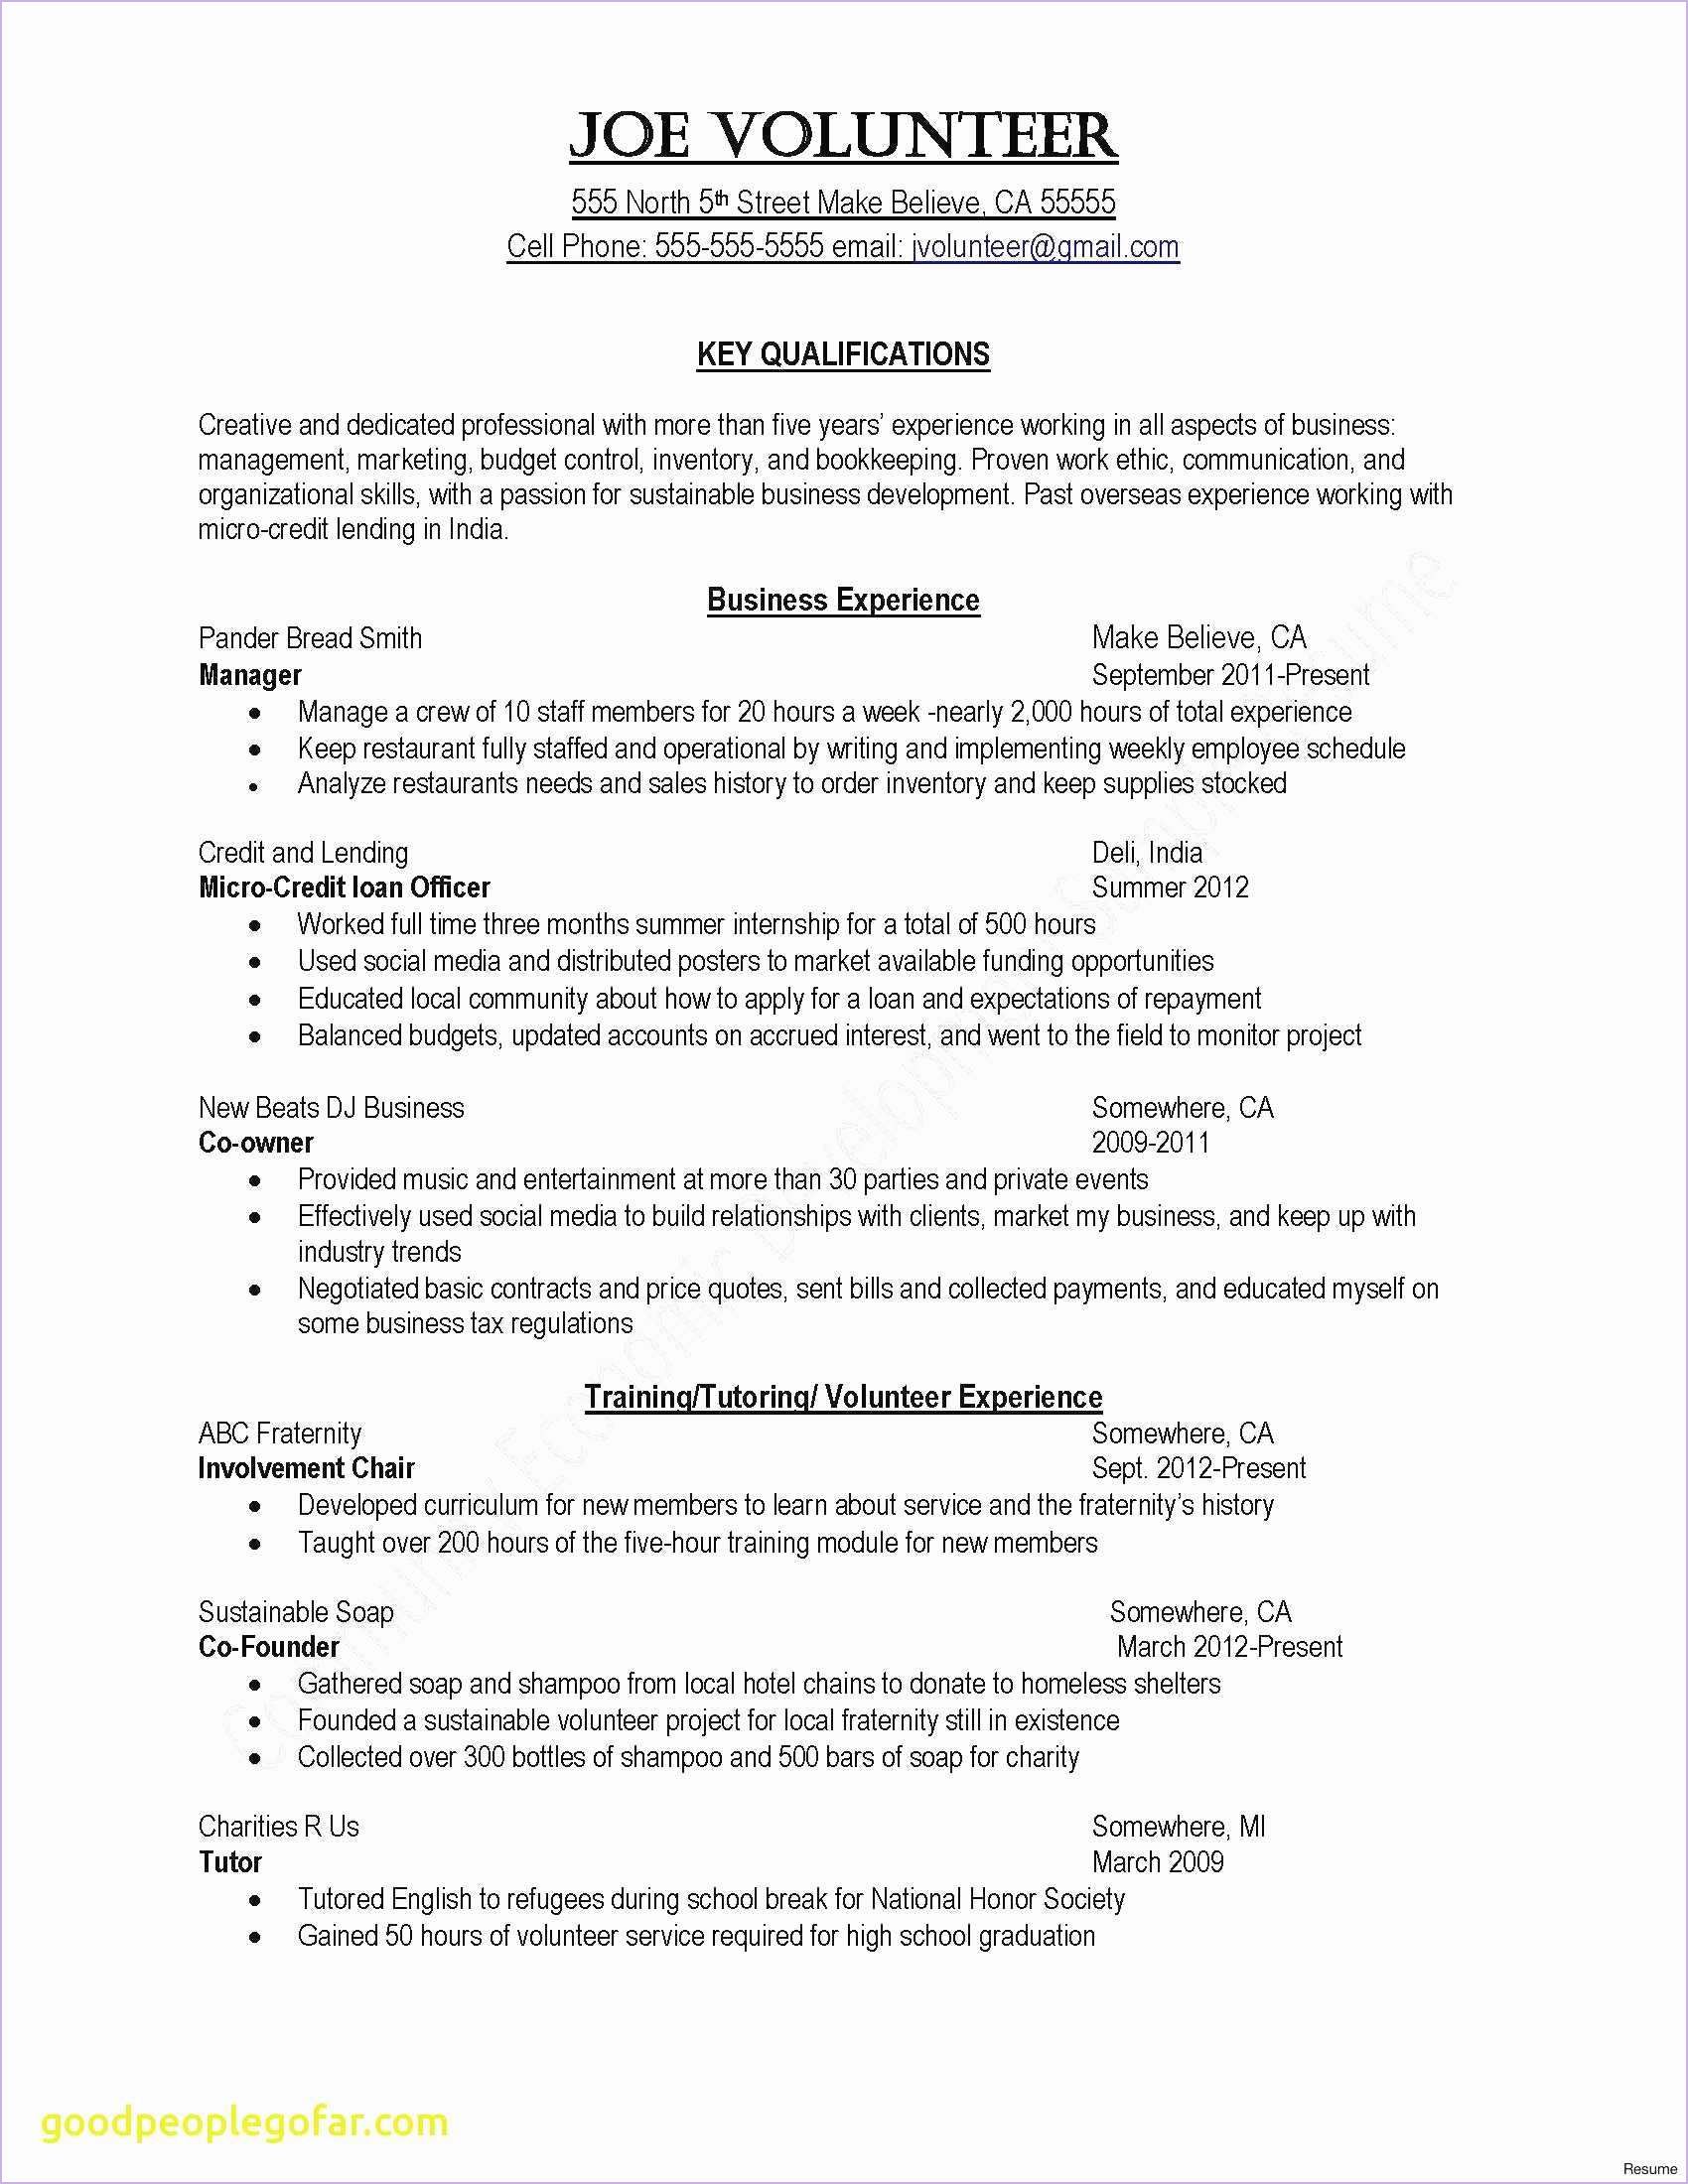 Resume For Graduate School Graduate School Cv Template 29 Grad School Resume Format Model Of Graduate School Cv Template resume for graduate school|wikiresume.com